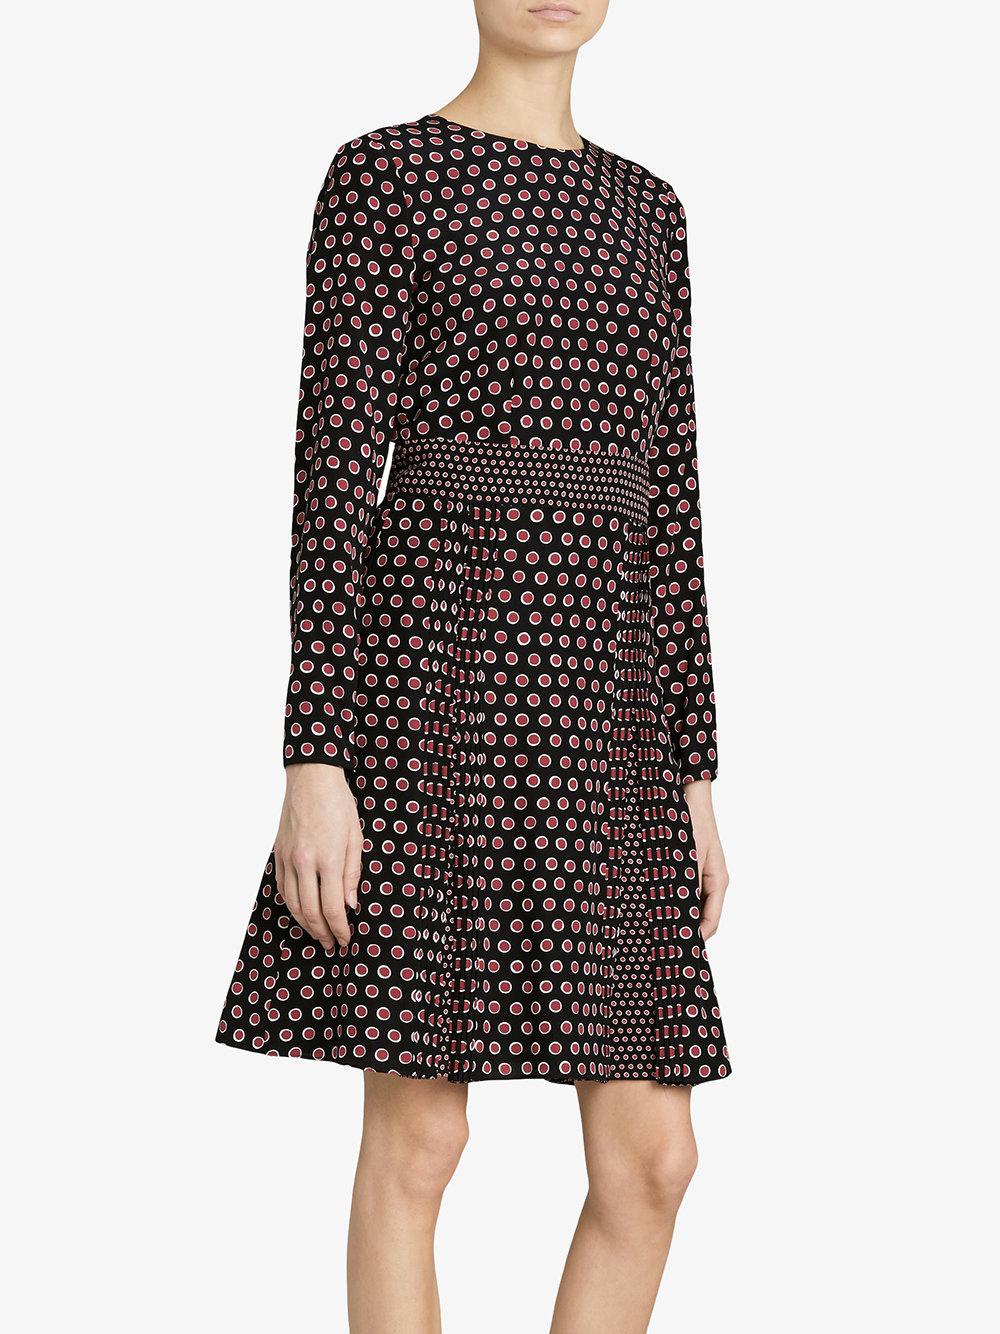 Burberry Dress Dot Shop, 52% OFF | jsazlaw.com